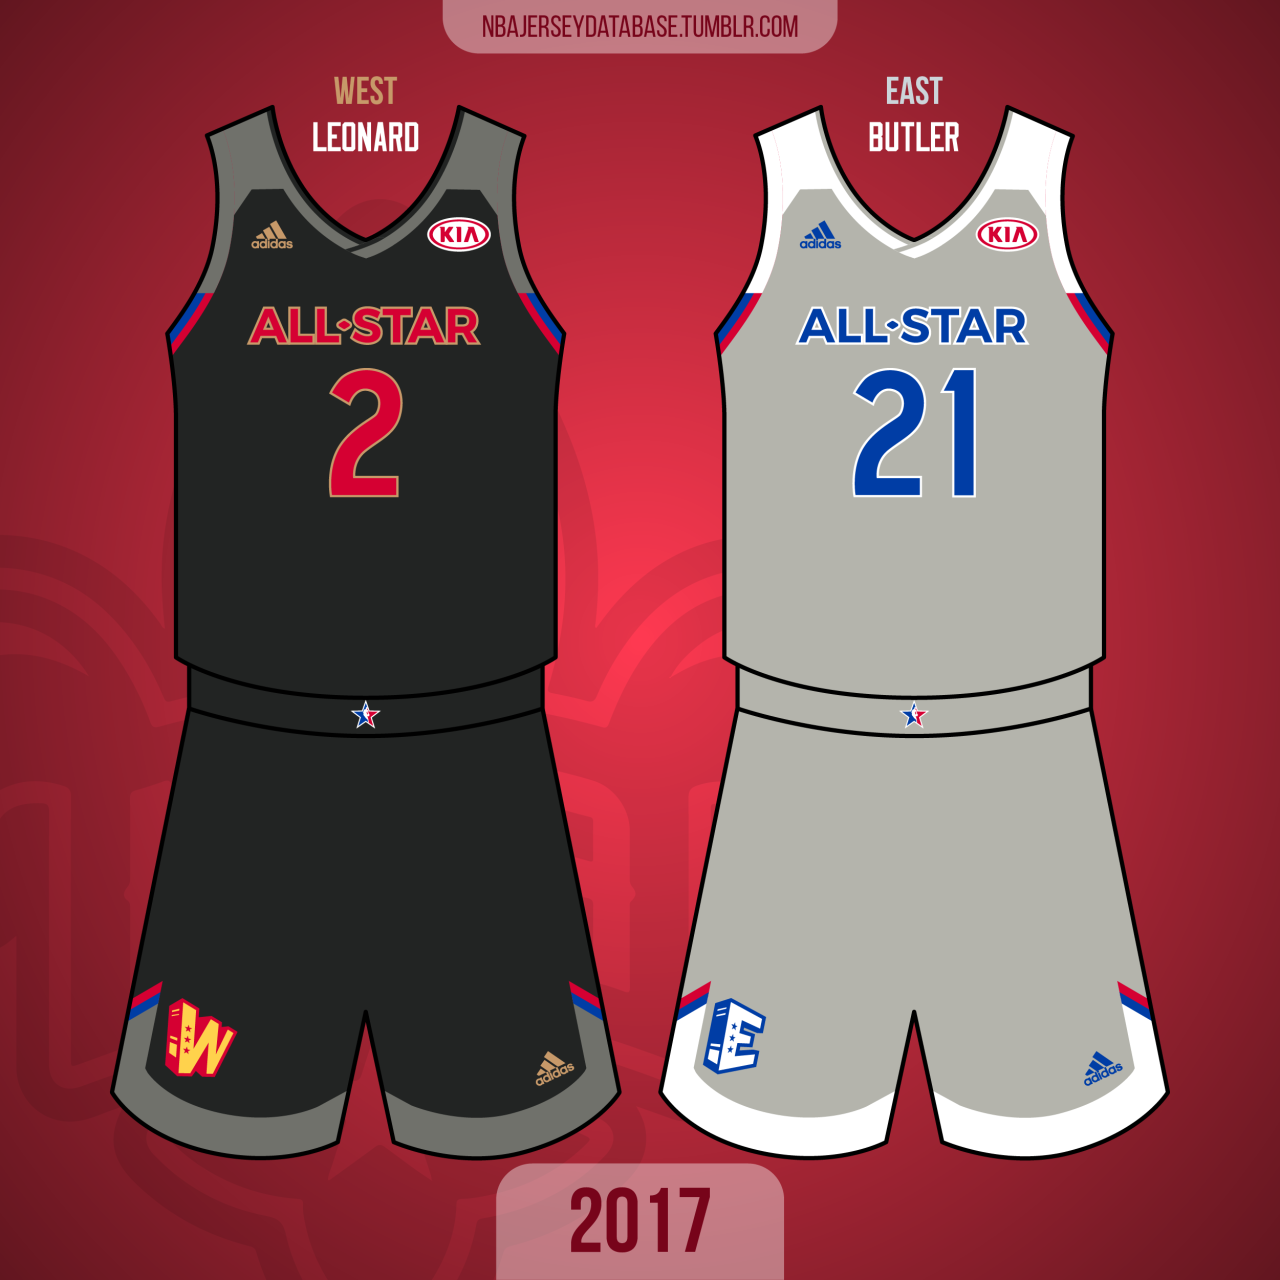 All-Star Jerseys 2017 on Behance